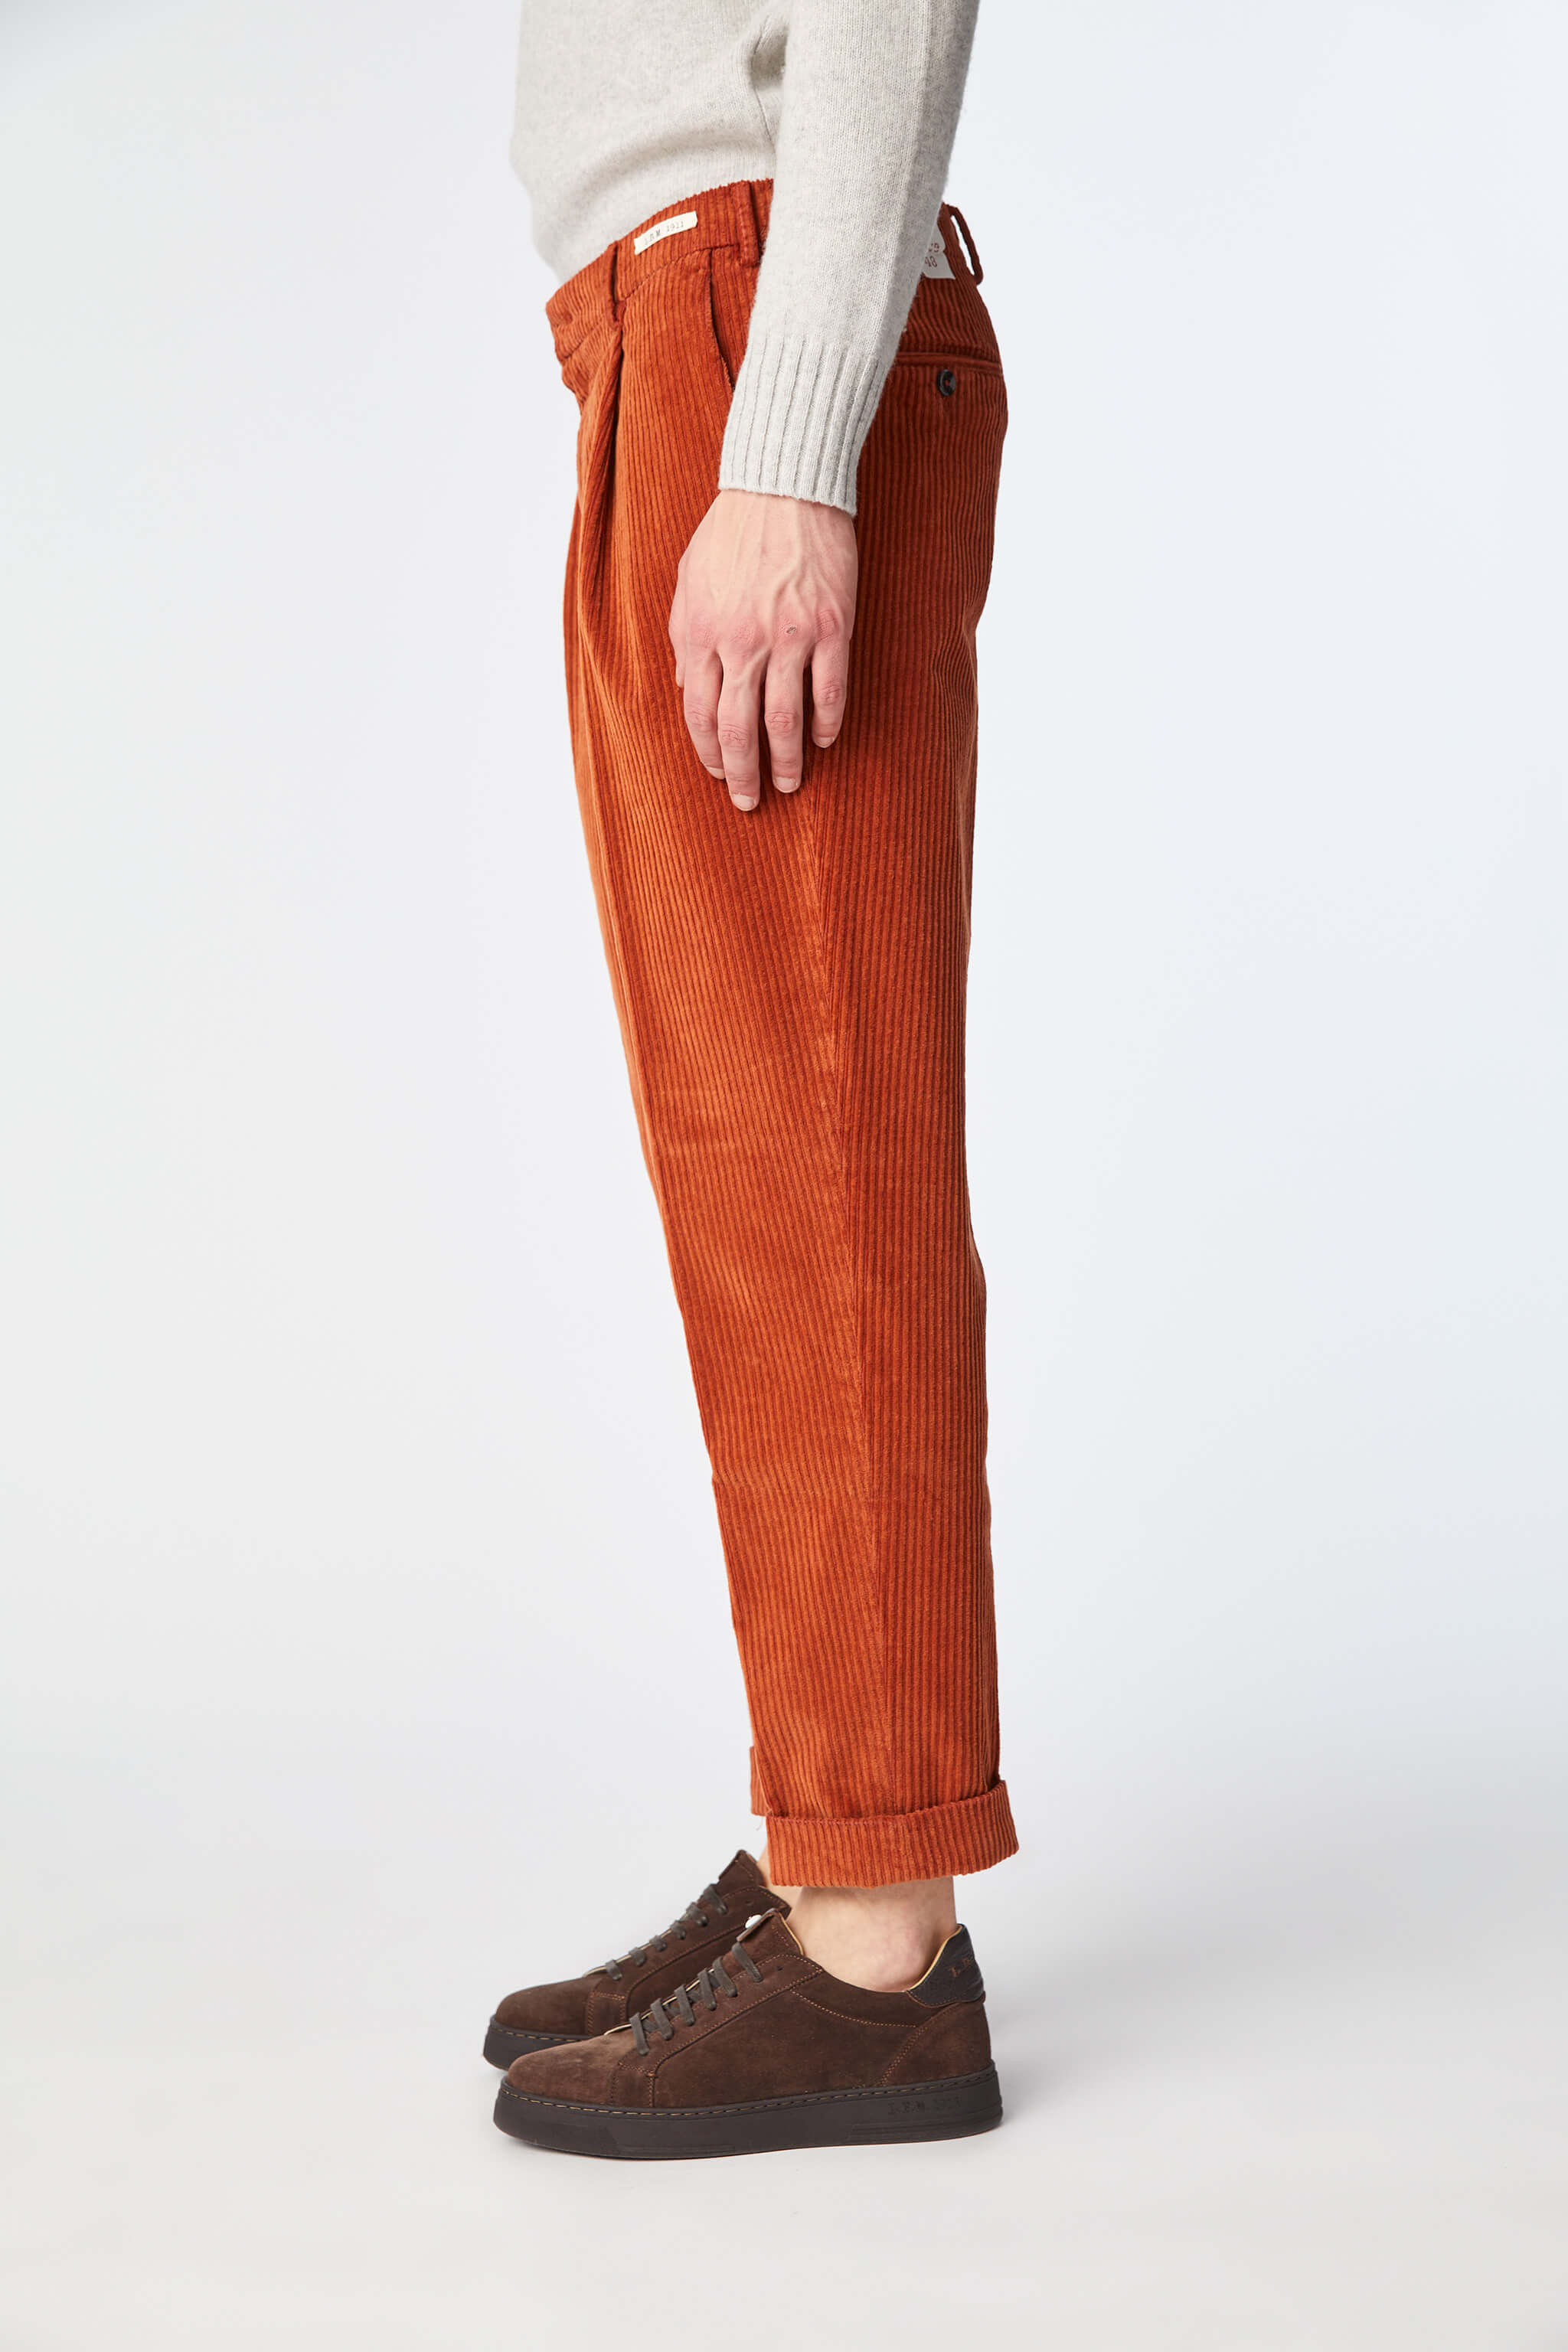 Garment-dyed MILES pants in orange